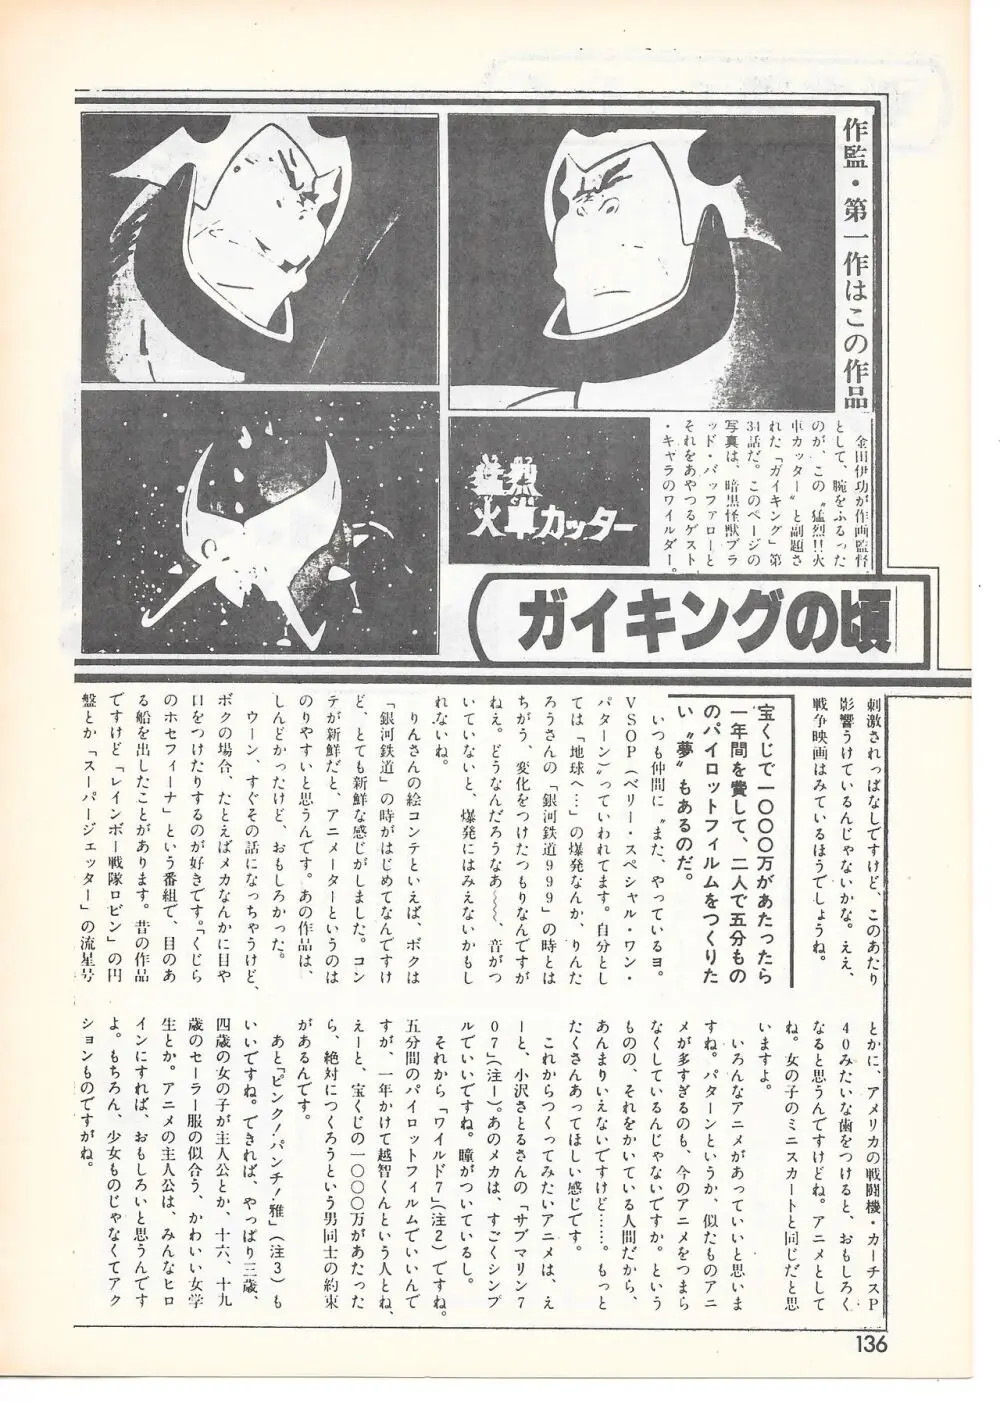 THE ANIMATOR 1 金田伊功特集号 - page131